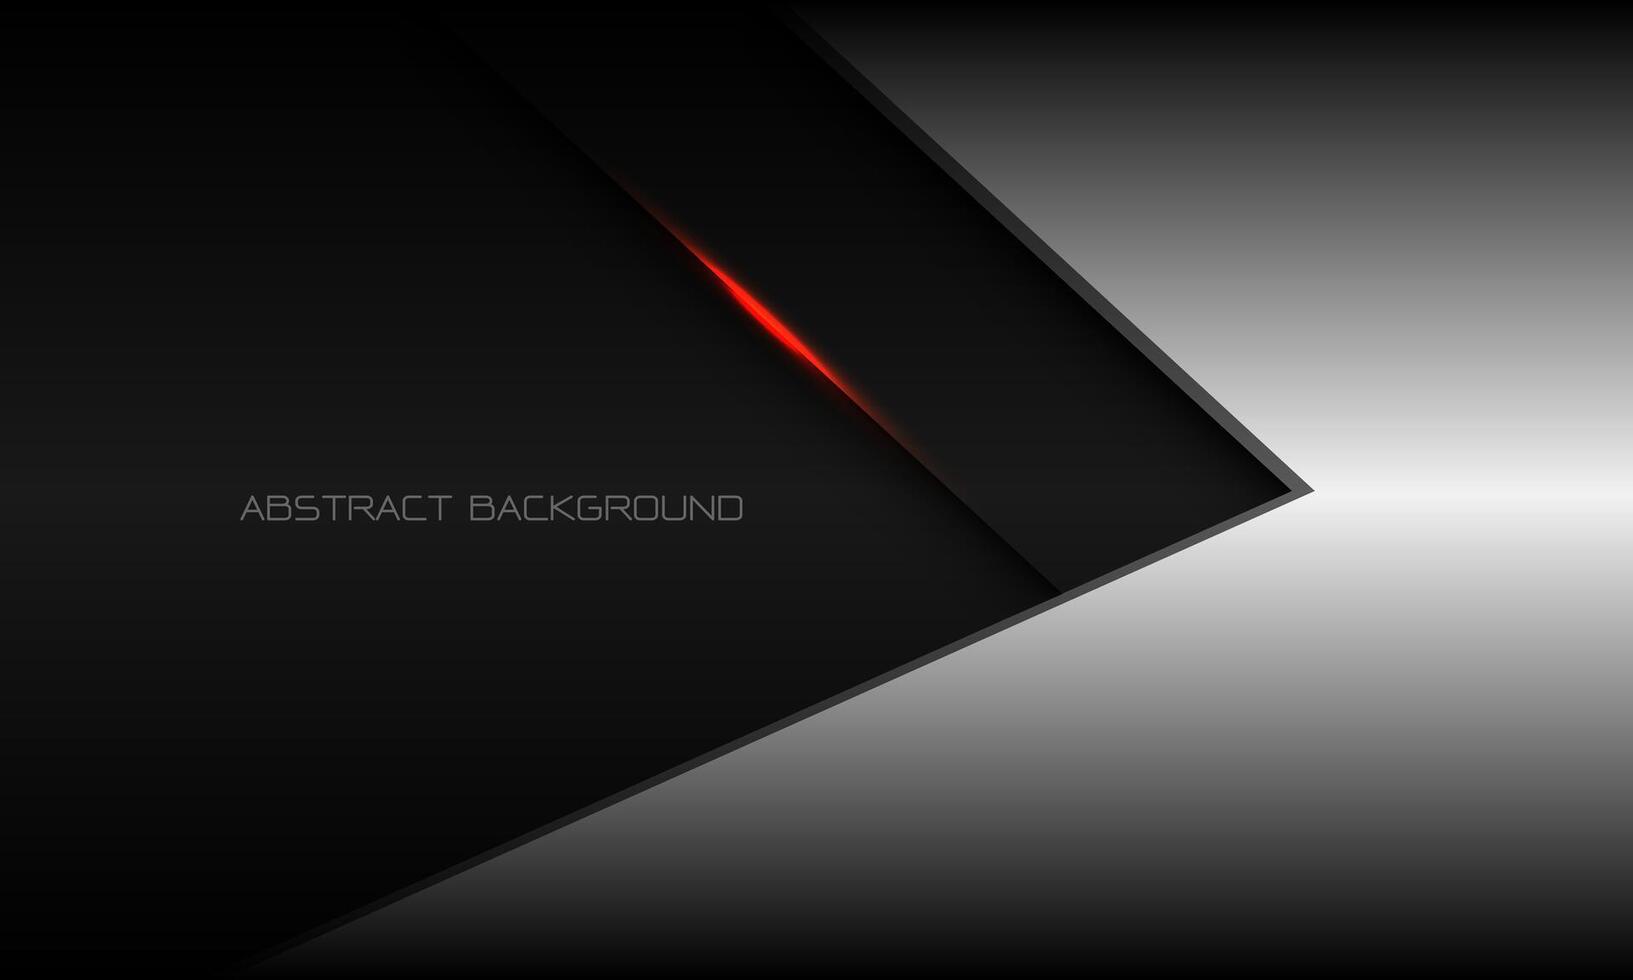 abstract zilver zwart metalen schaduw rood licht pijl richting meetkundig luxe ontwerp modern futuristische technologie achtergrond vector